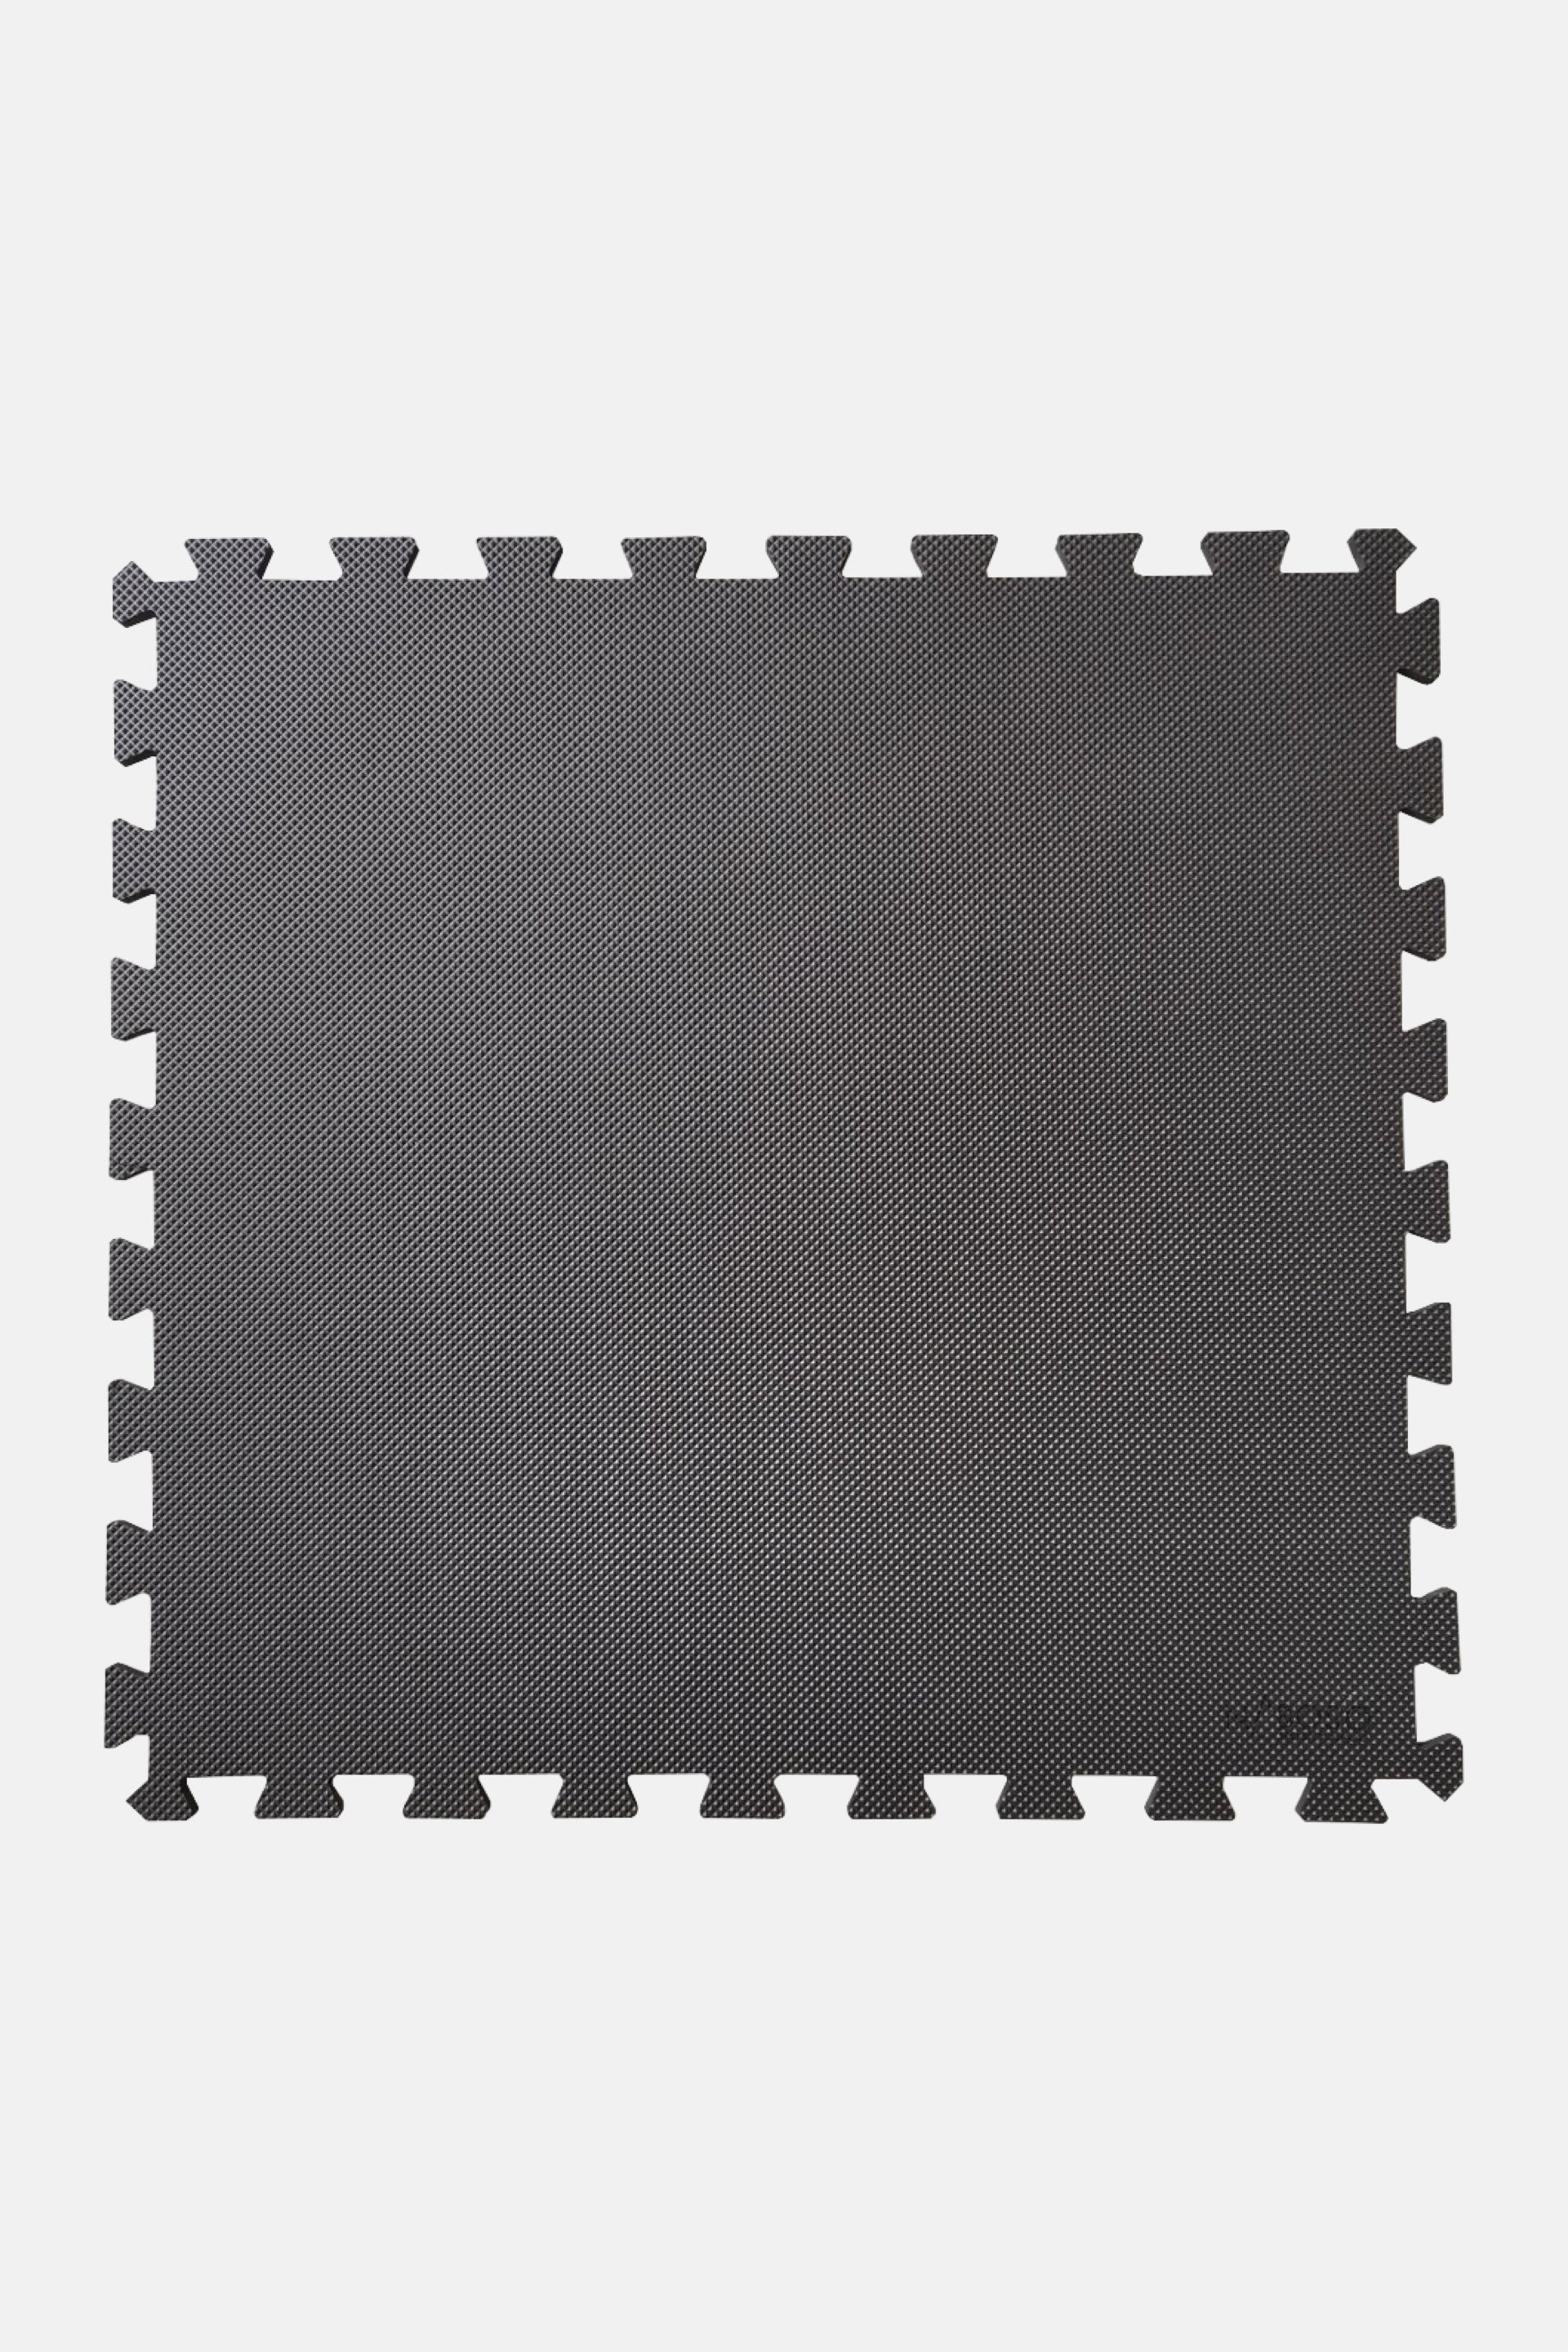 1 black Naboso proprioceptive flooring tile 